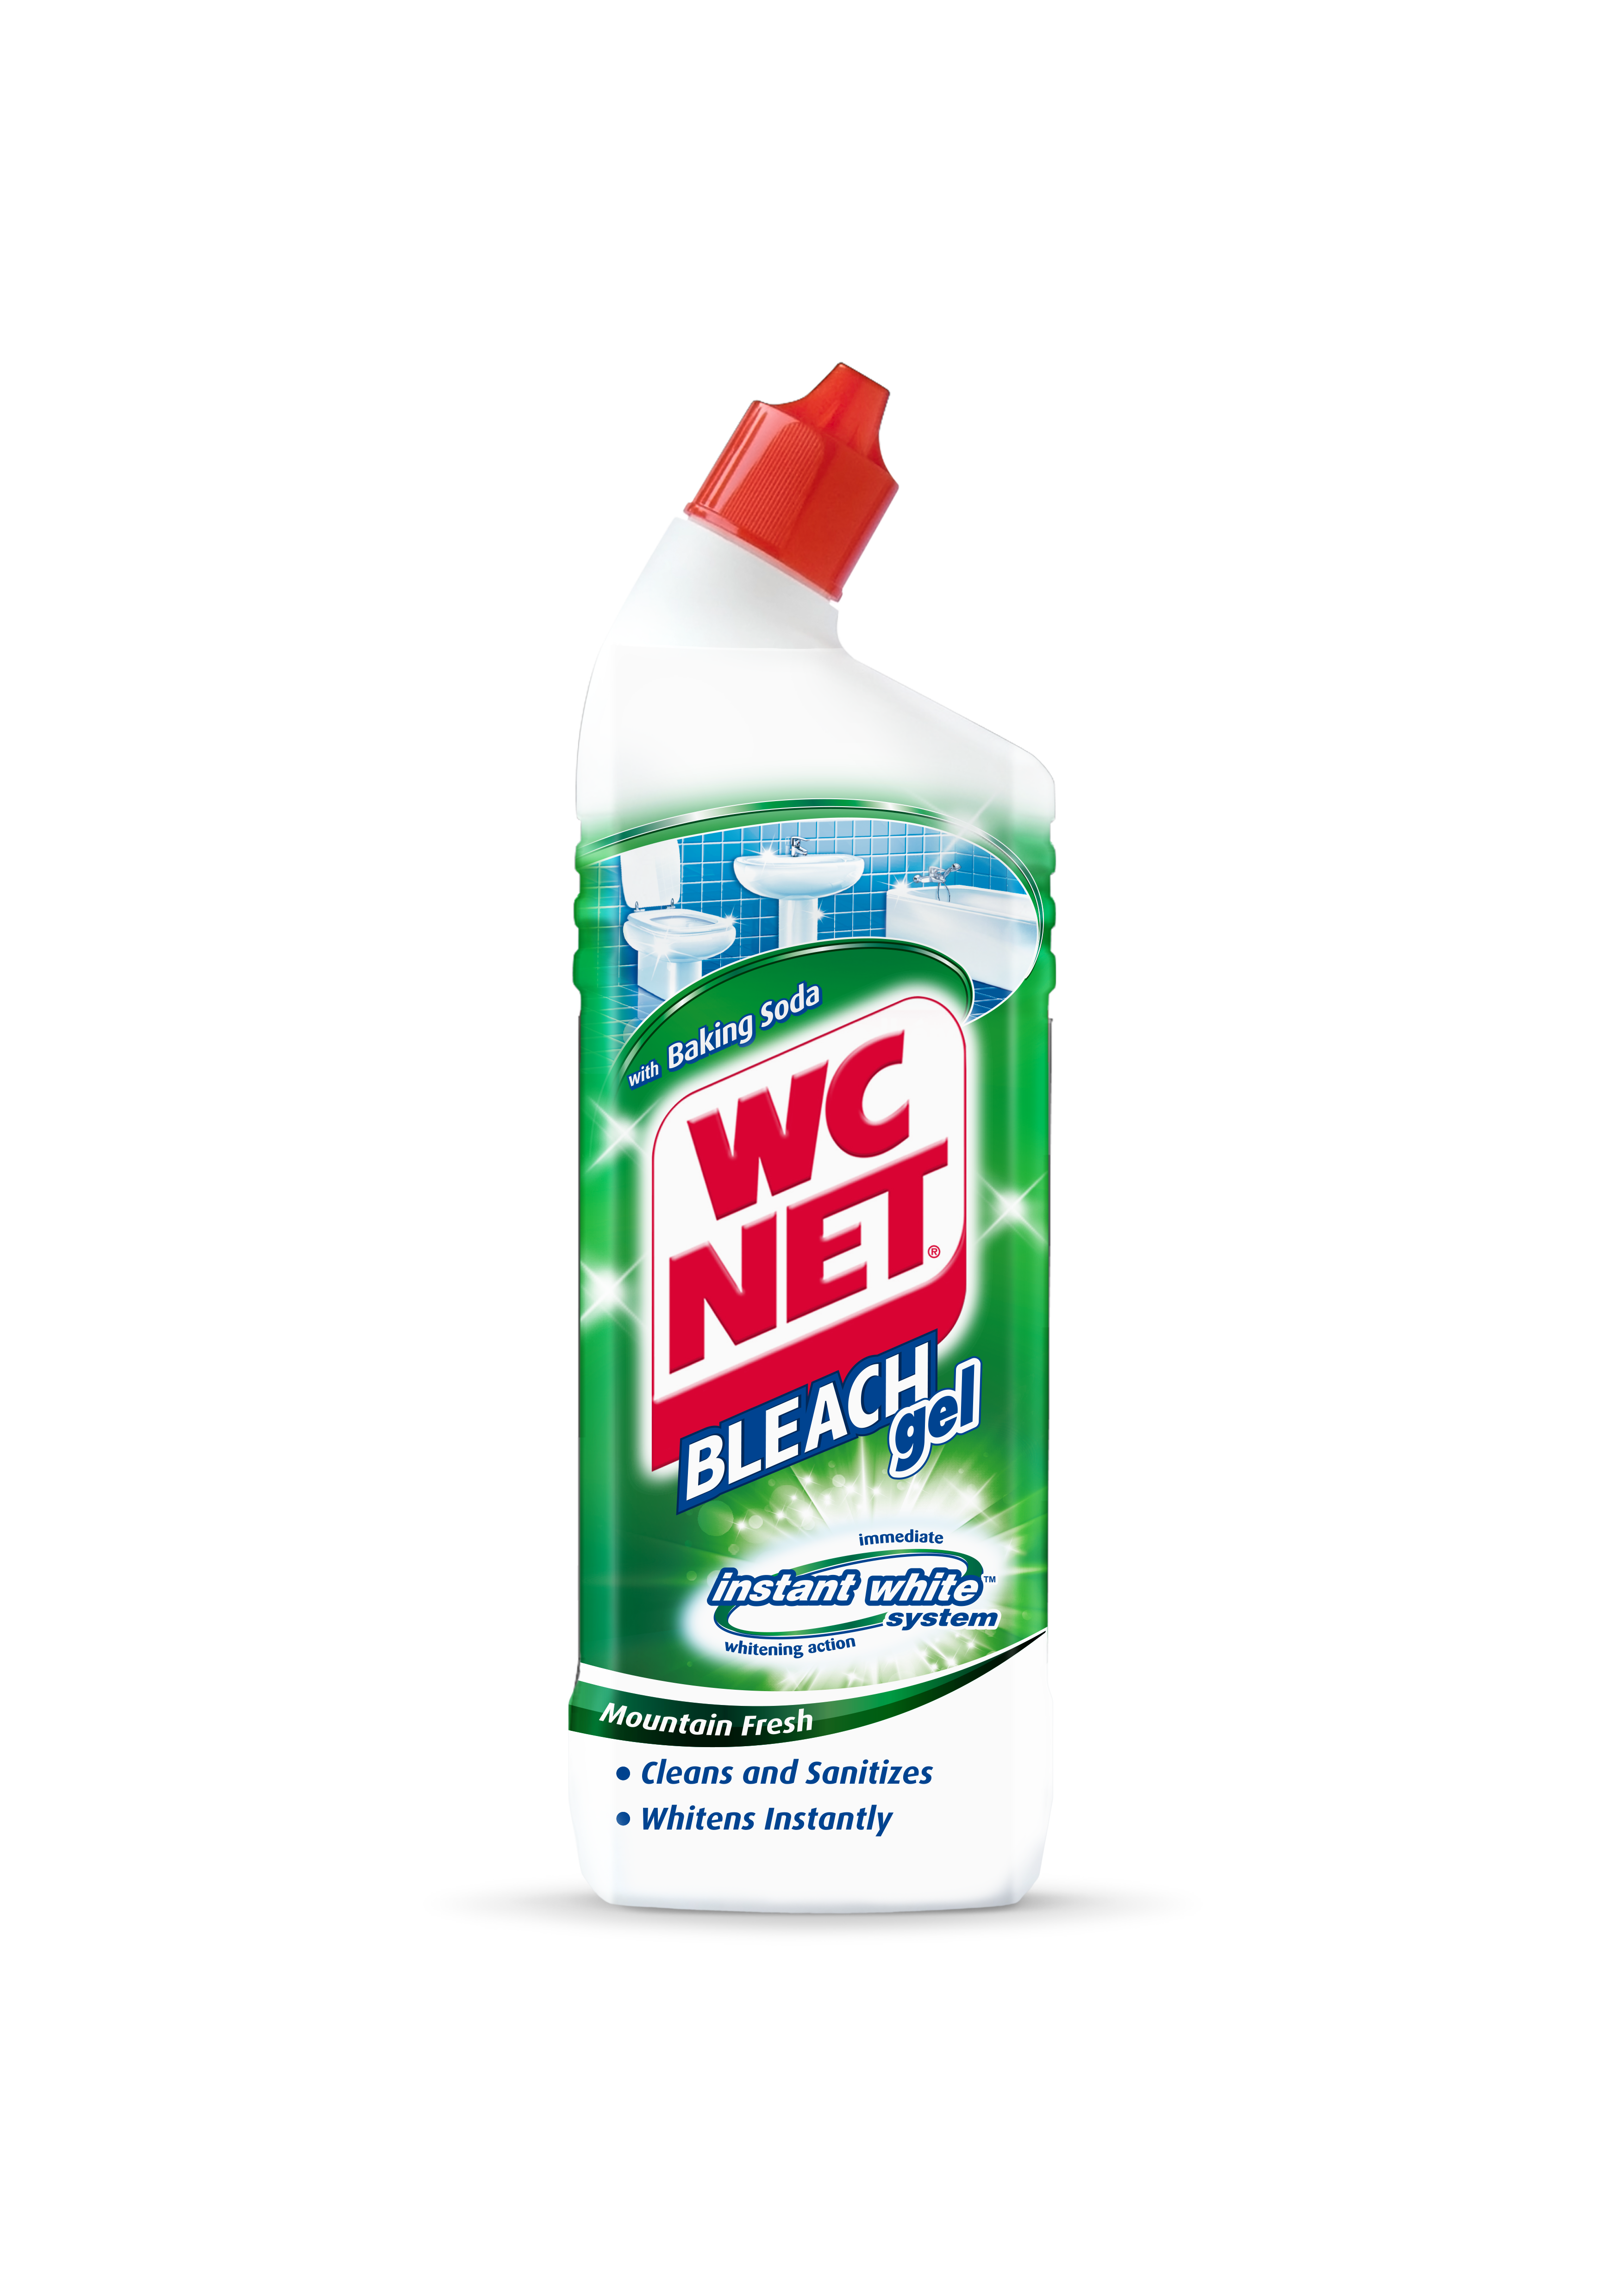 WC NET Bleach gel Mountain Fresh